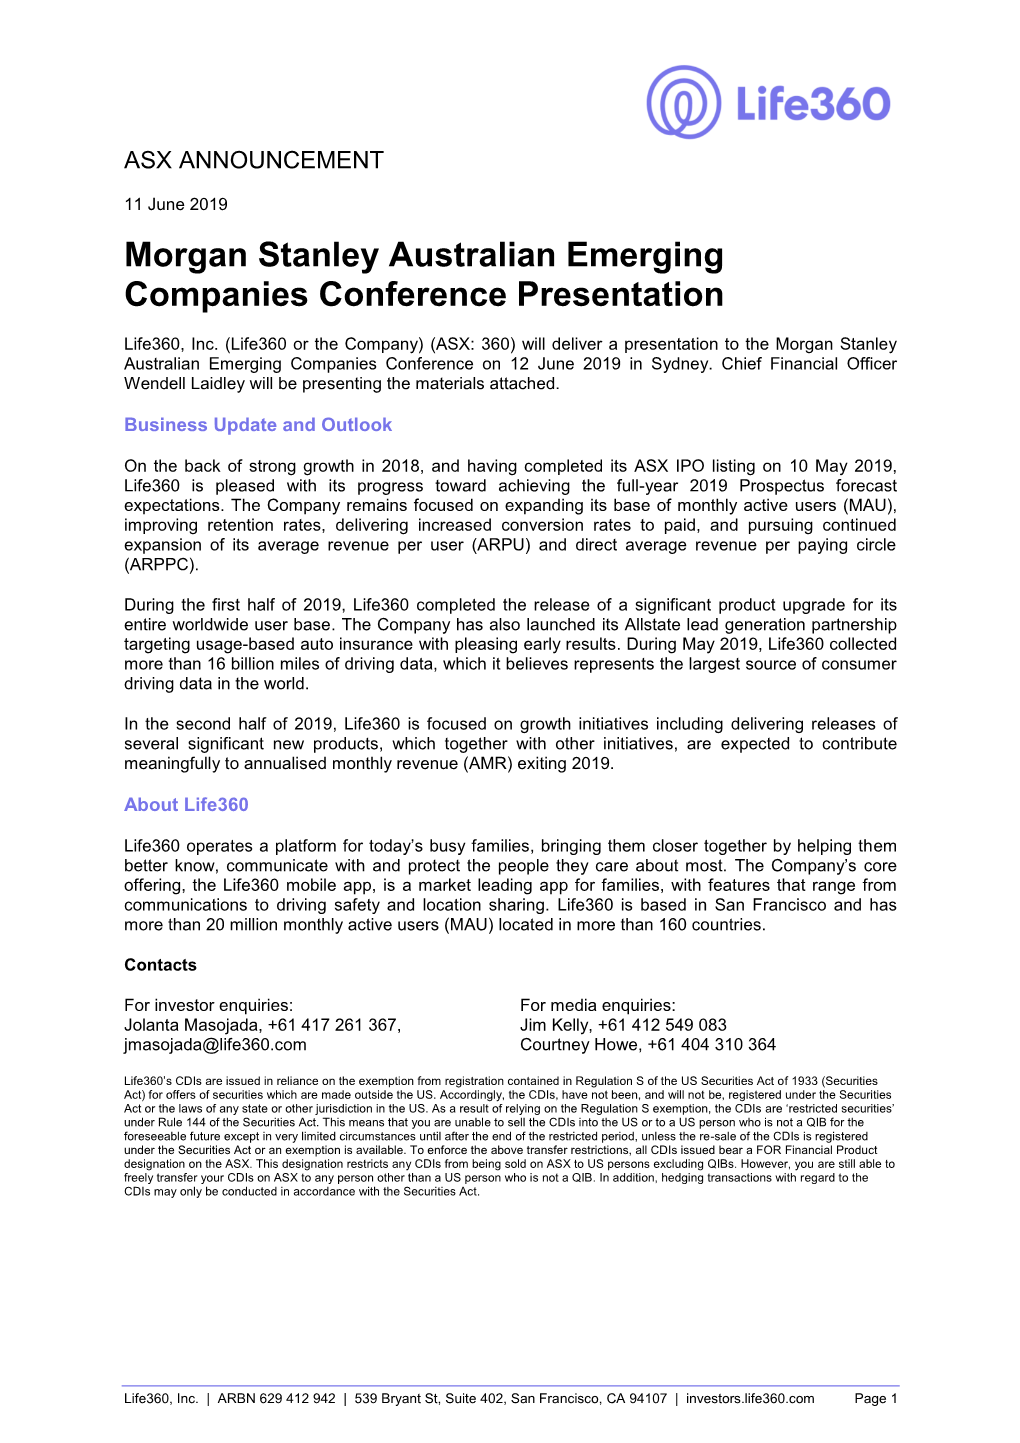 Morgan Stanley Australian Emerging Companies Conference Presentation